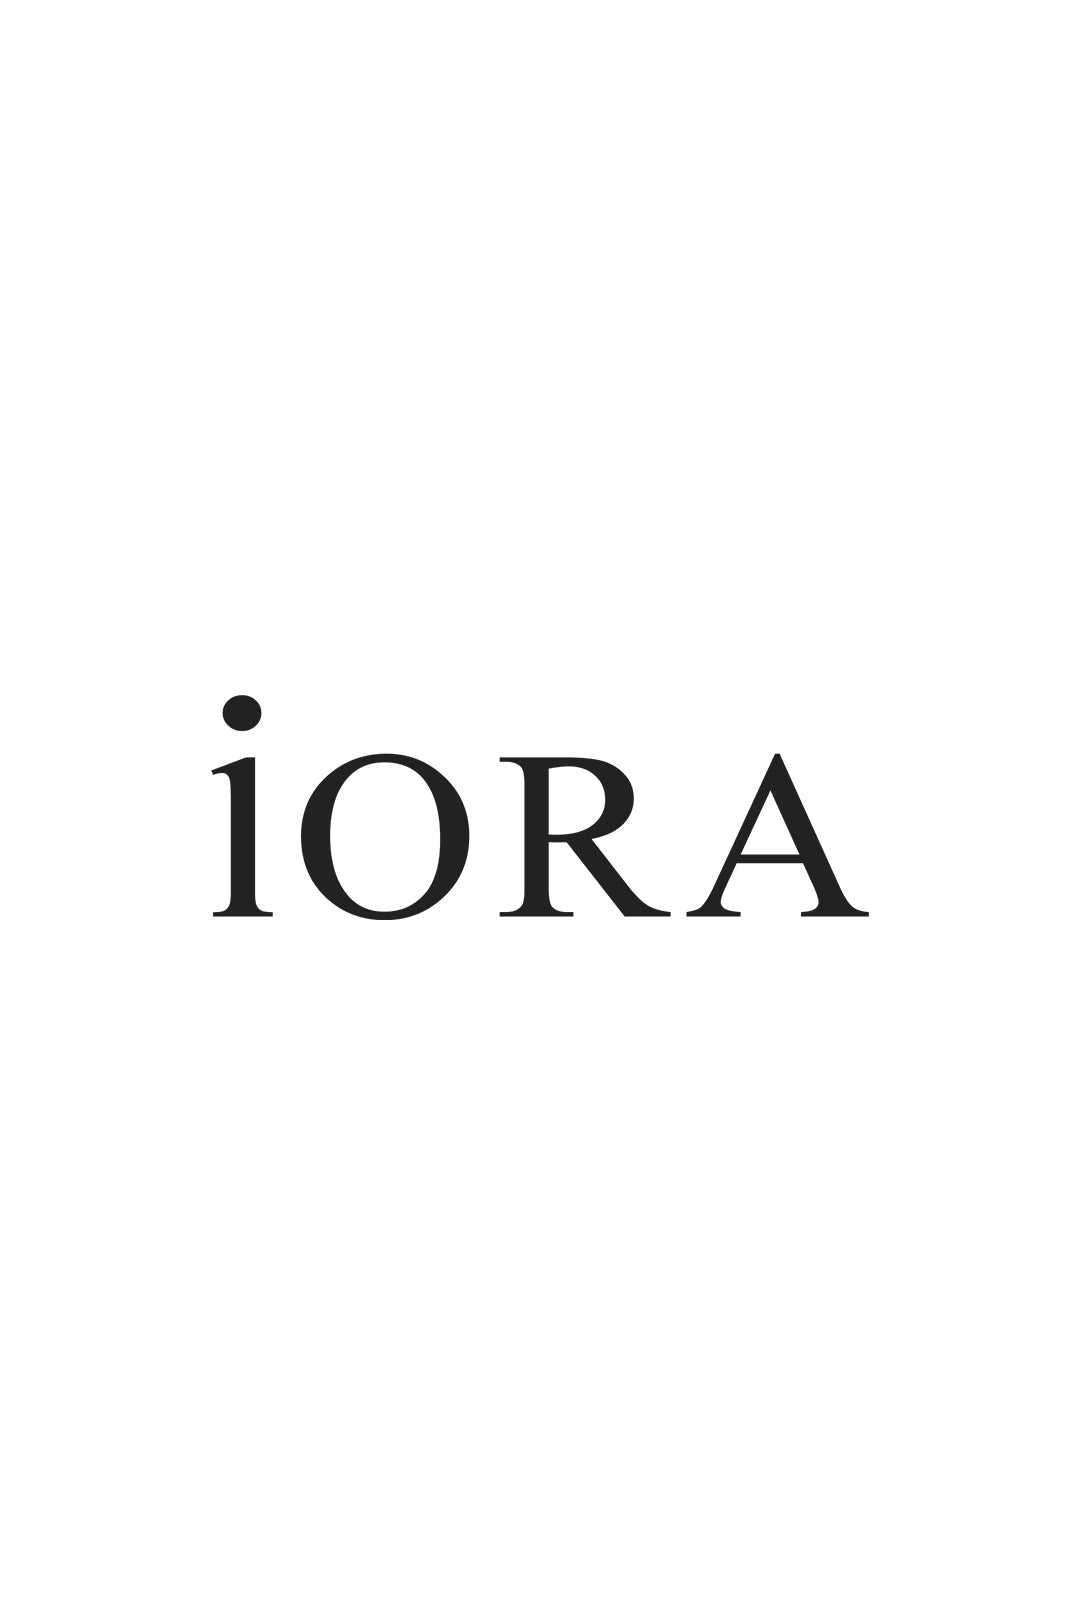 iora-logo-shopee